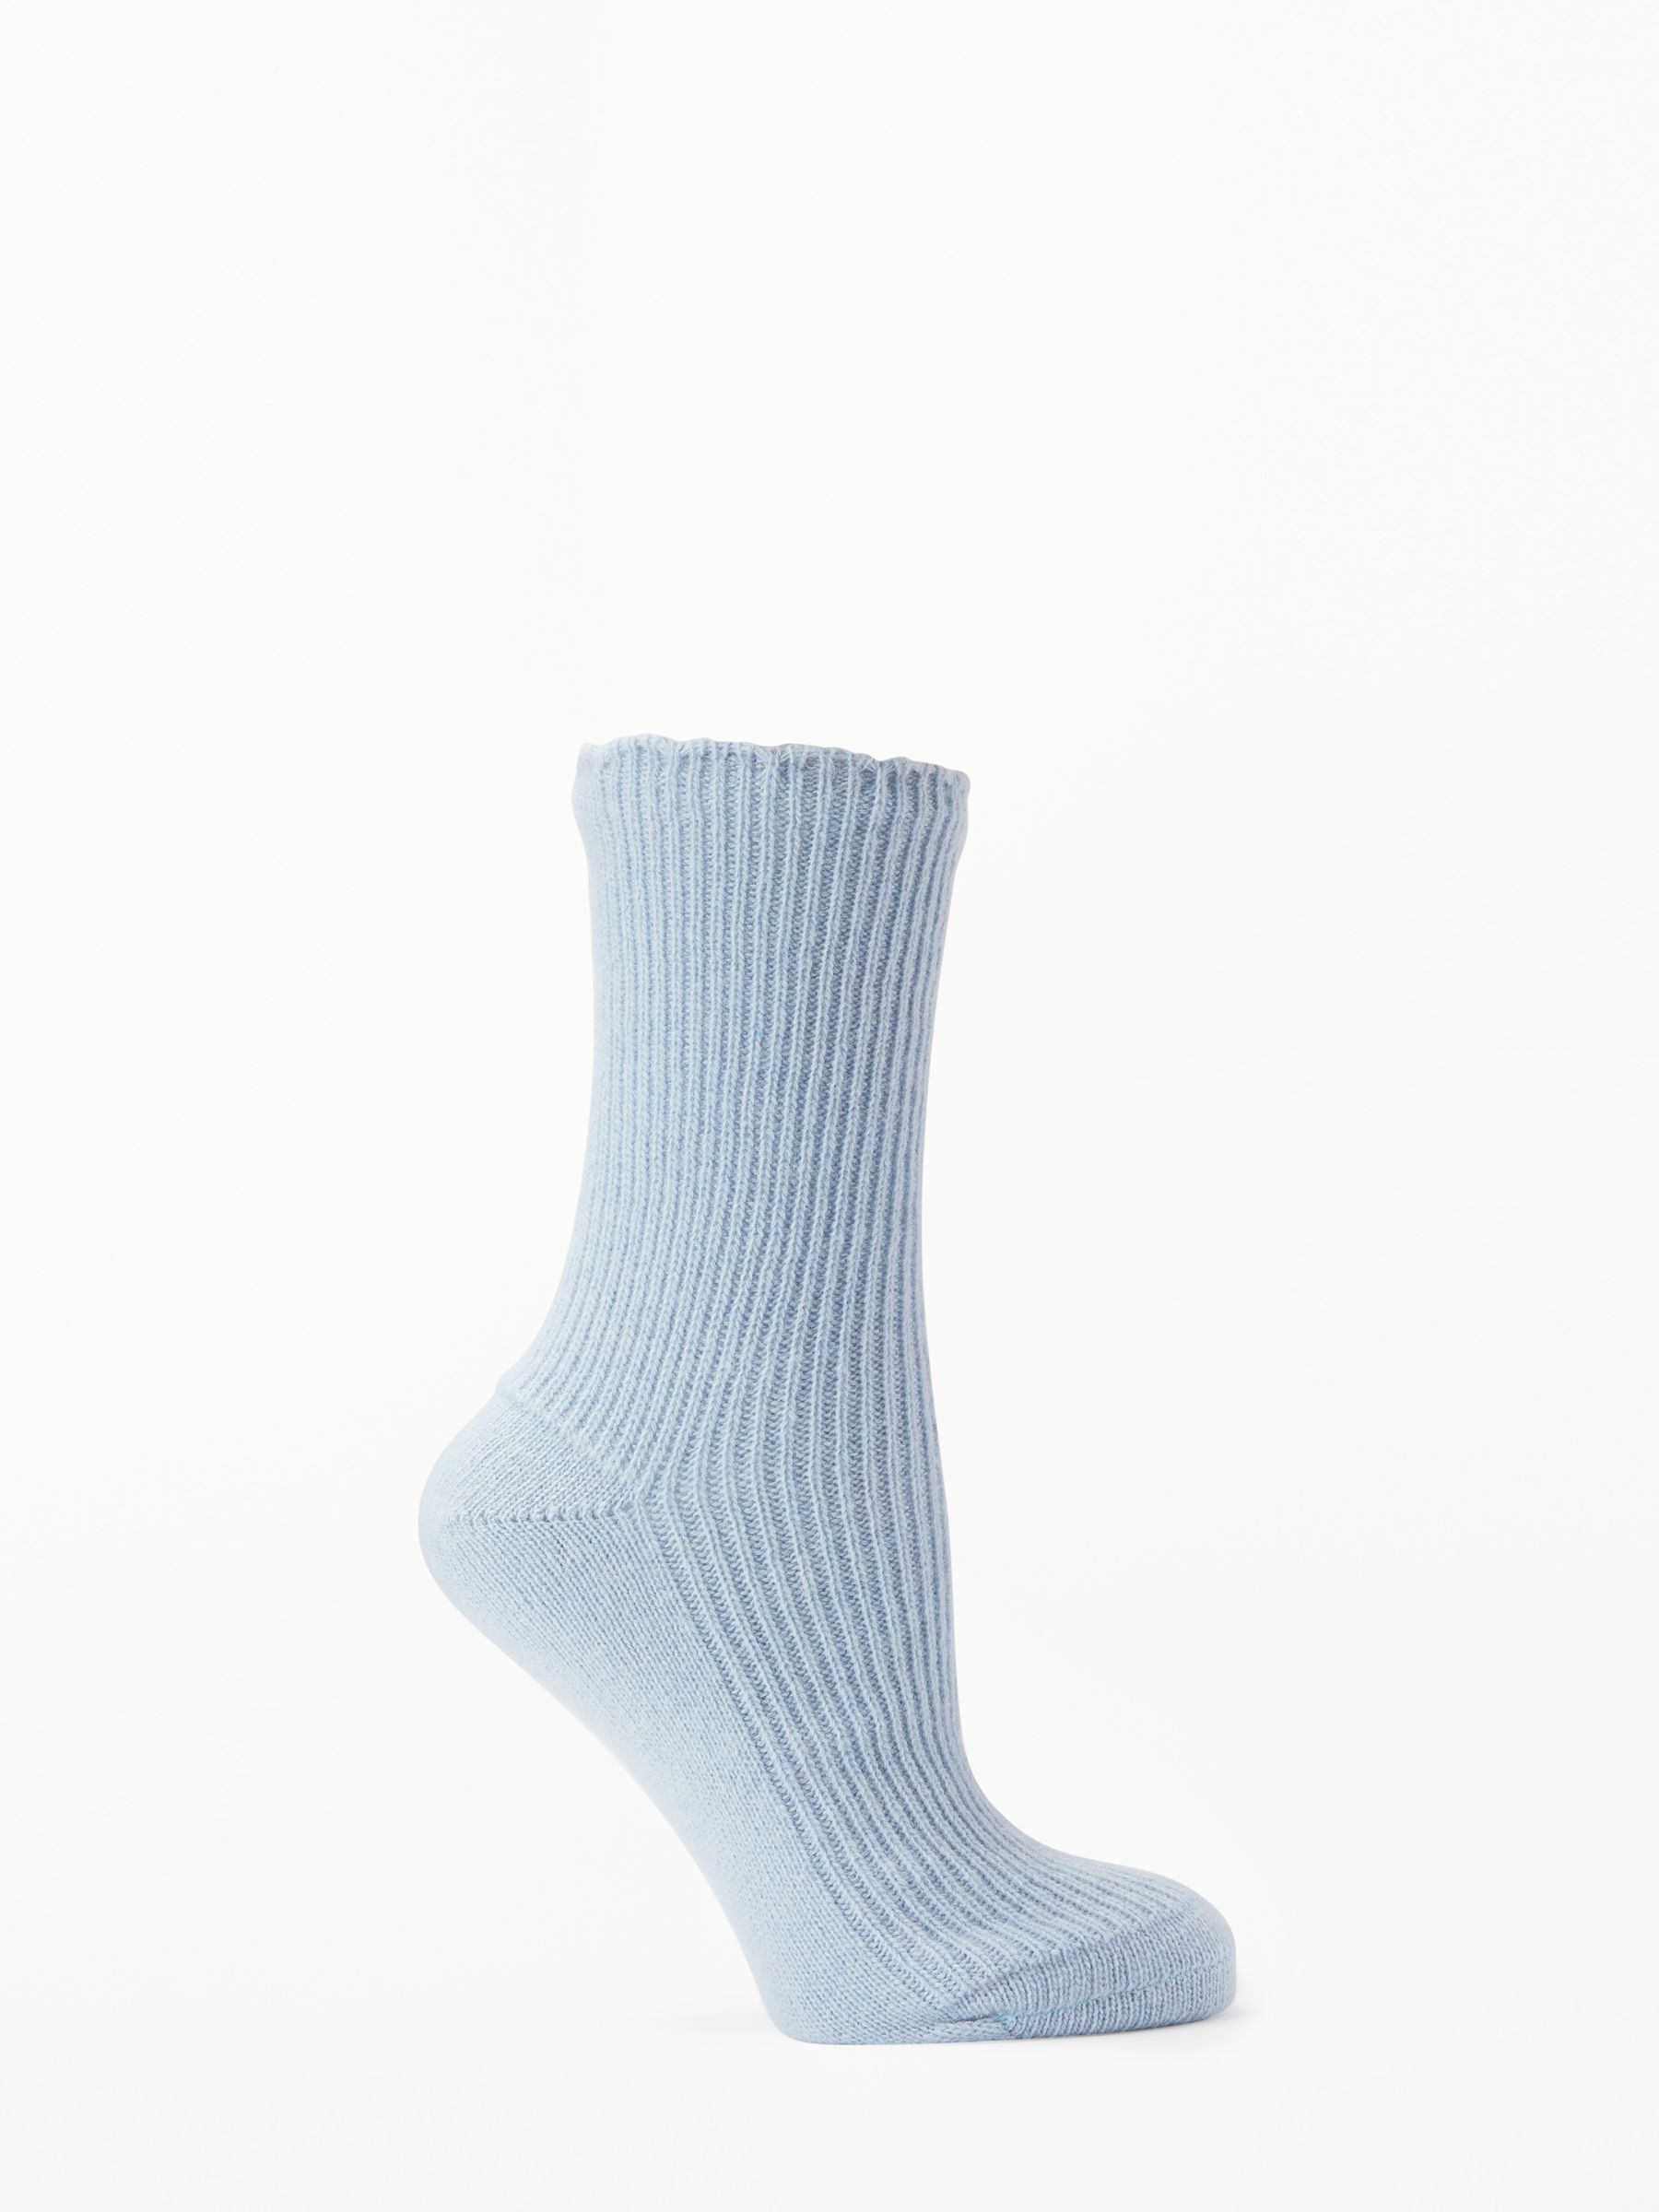 John Lewis & Partners Cashmere Bed Socks